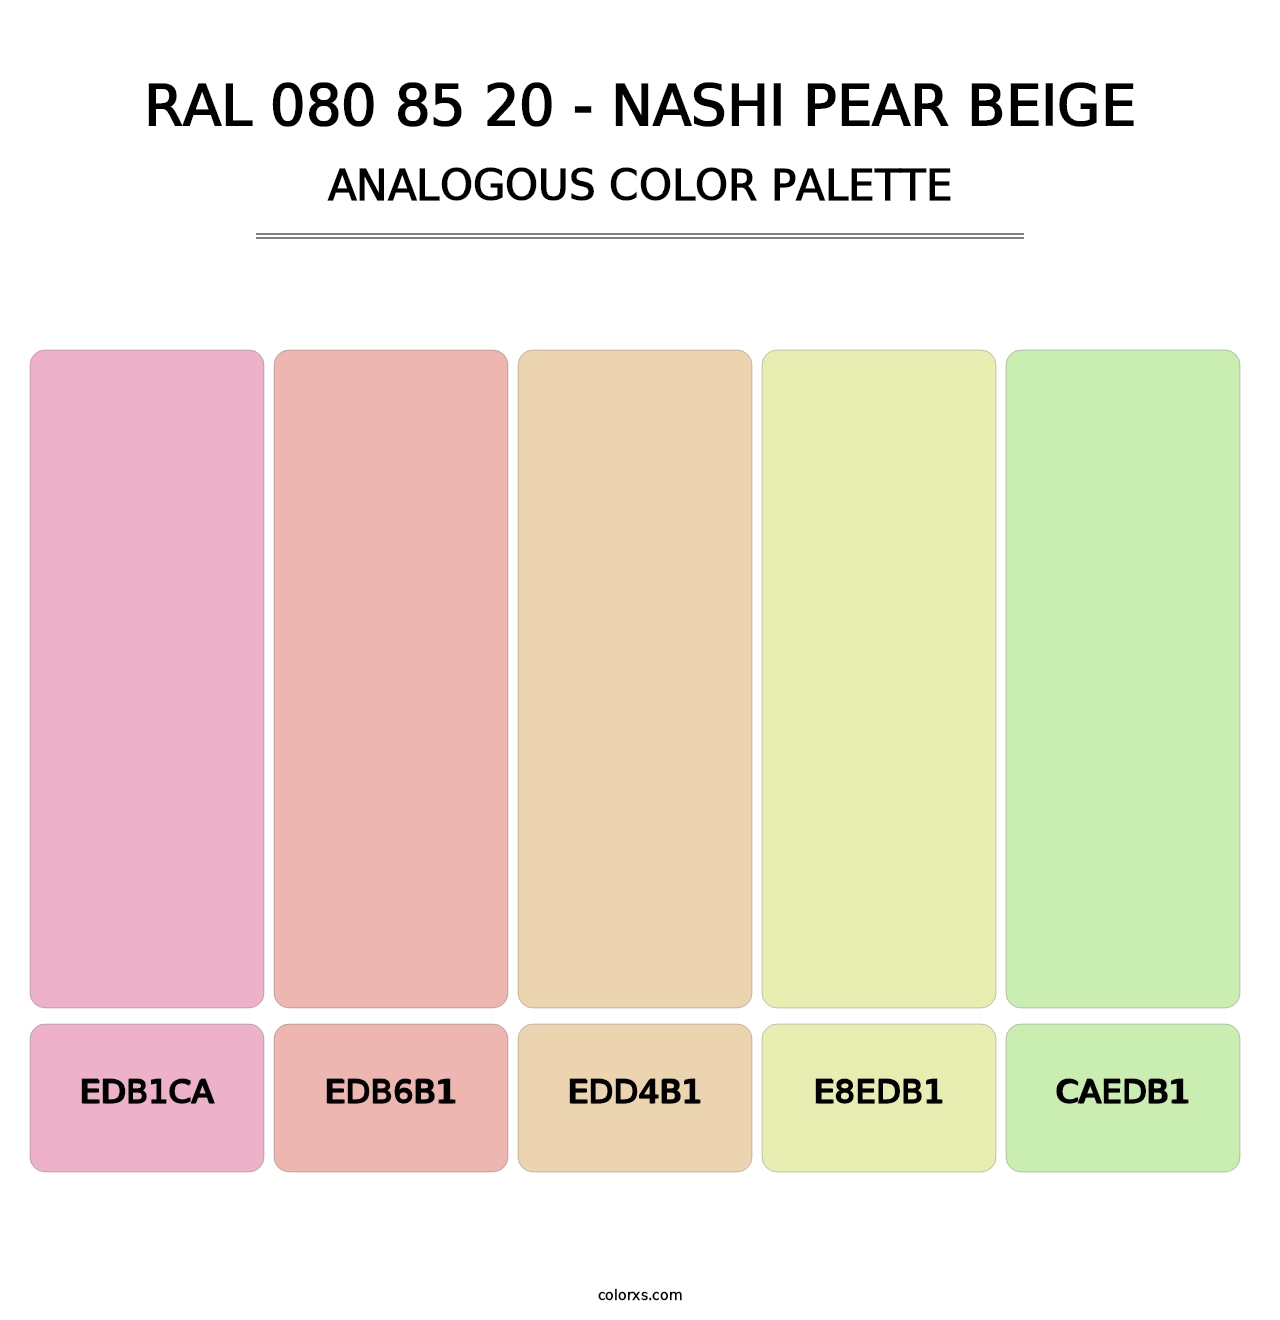 RAL 080 85 20 - Nashi Pear Beige - Analogous Color Palette